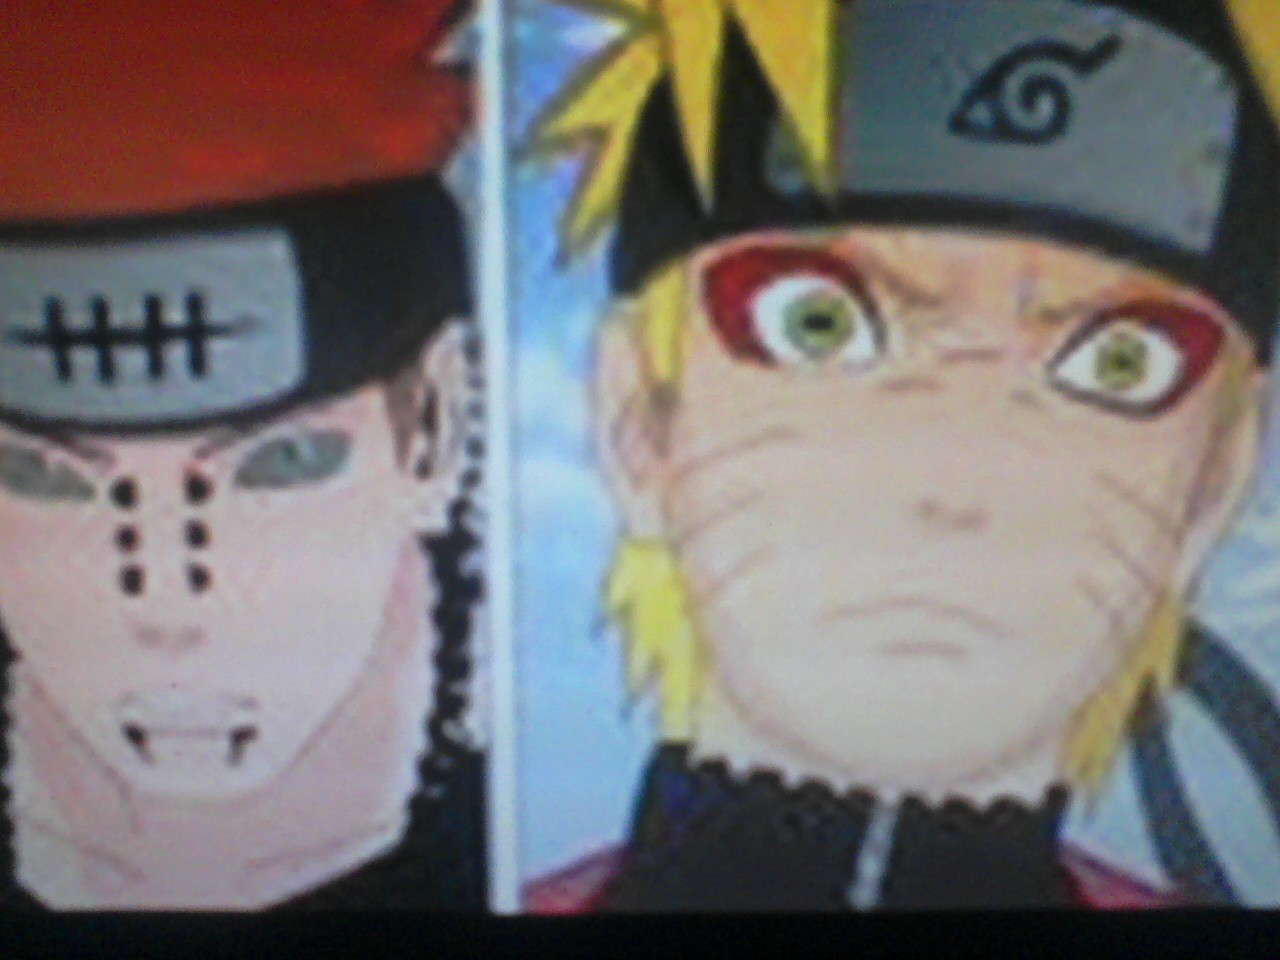 Naruto VS Pain wallpaper